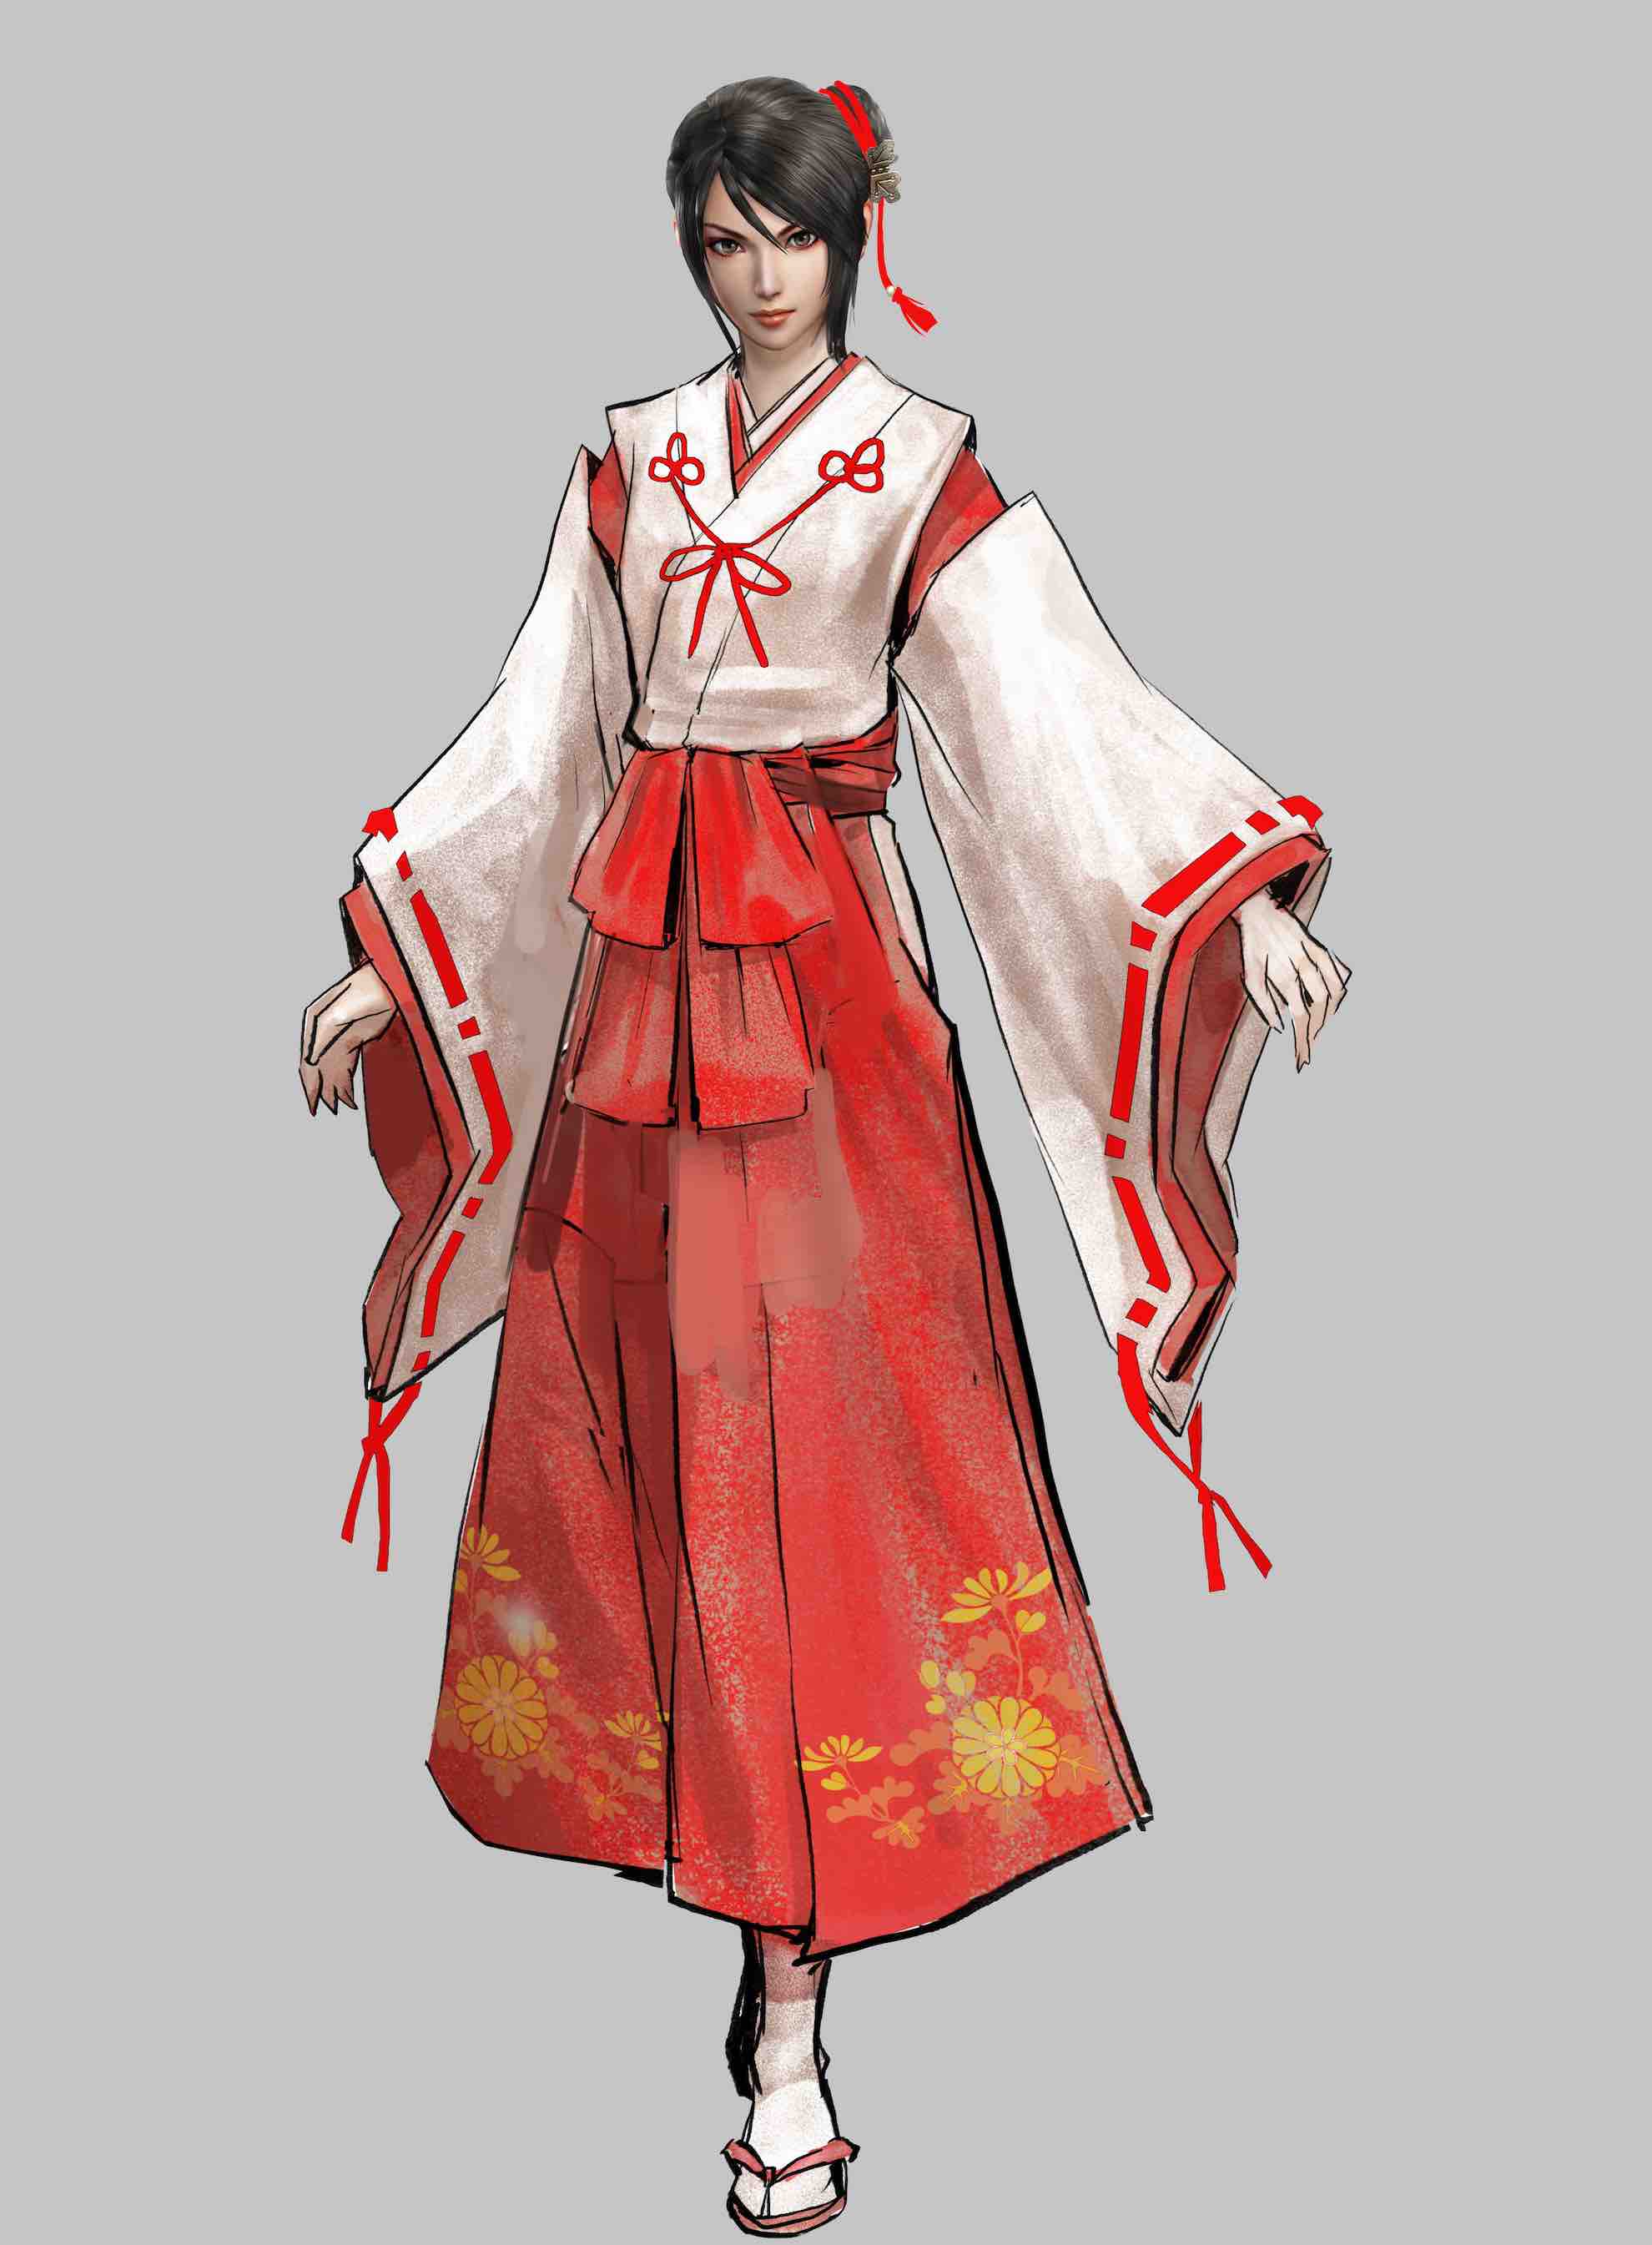 Warriors Orochi 4 Xingcai Alternate Costume